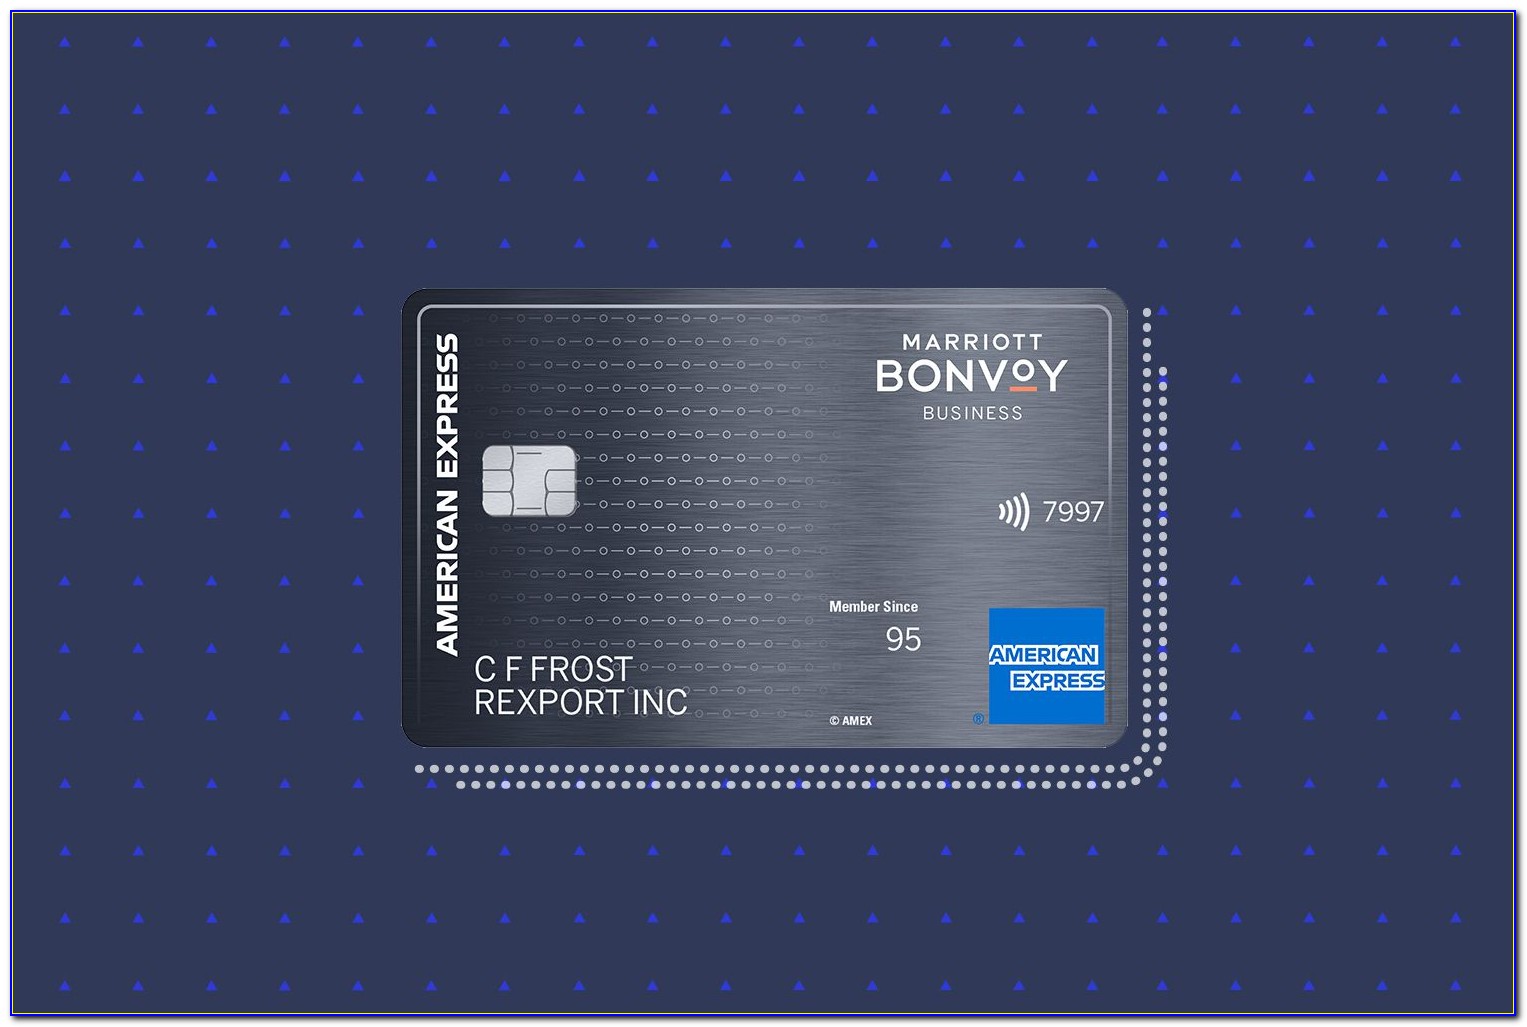 Marriott Bonvoy Business Card